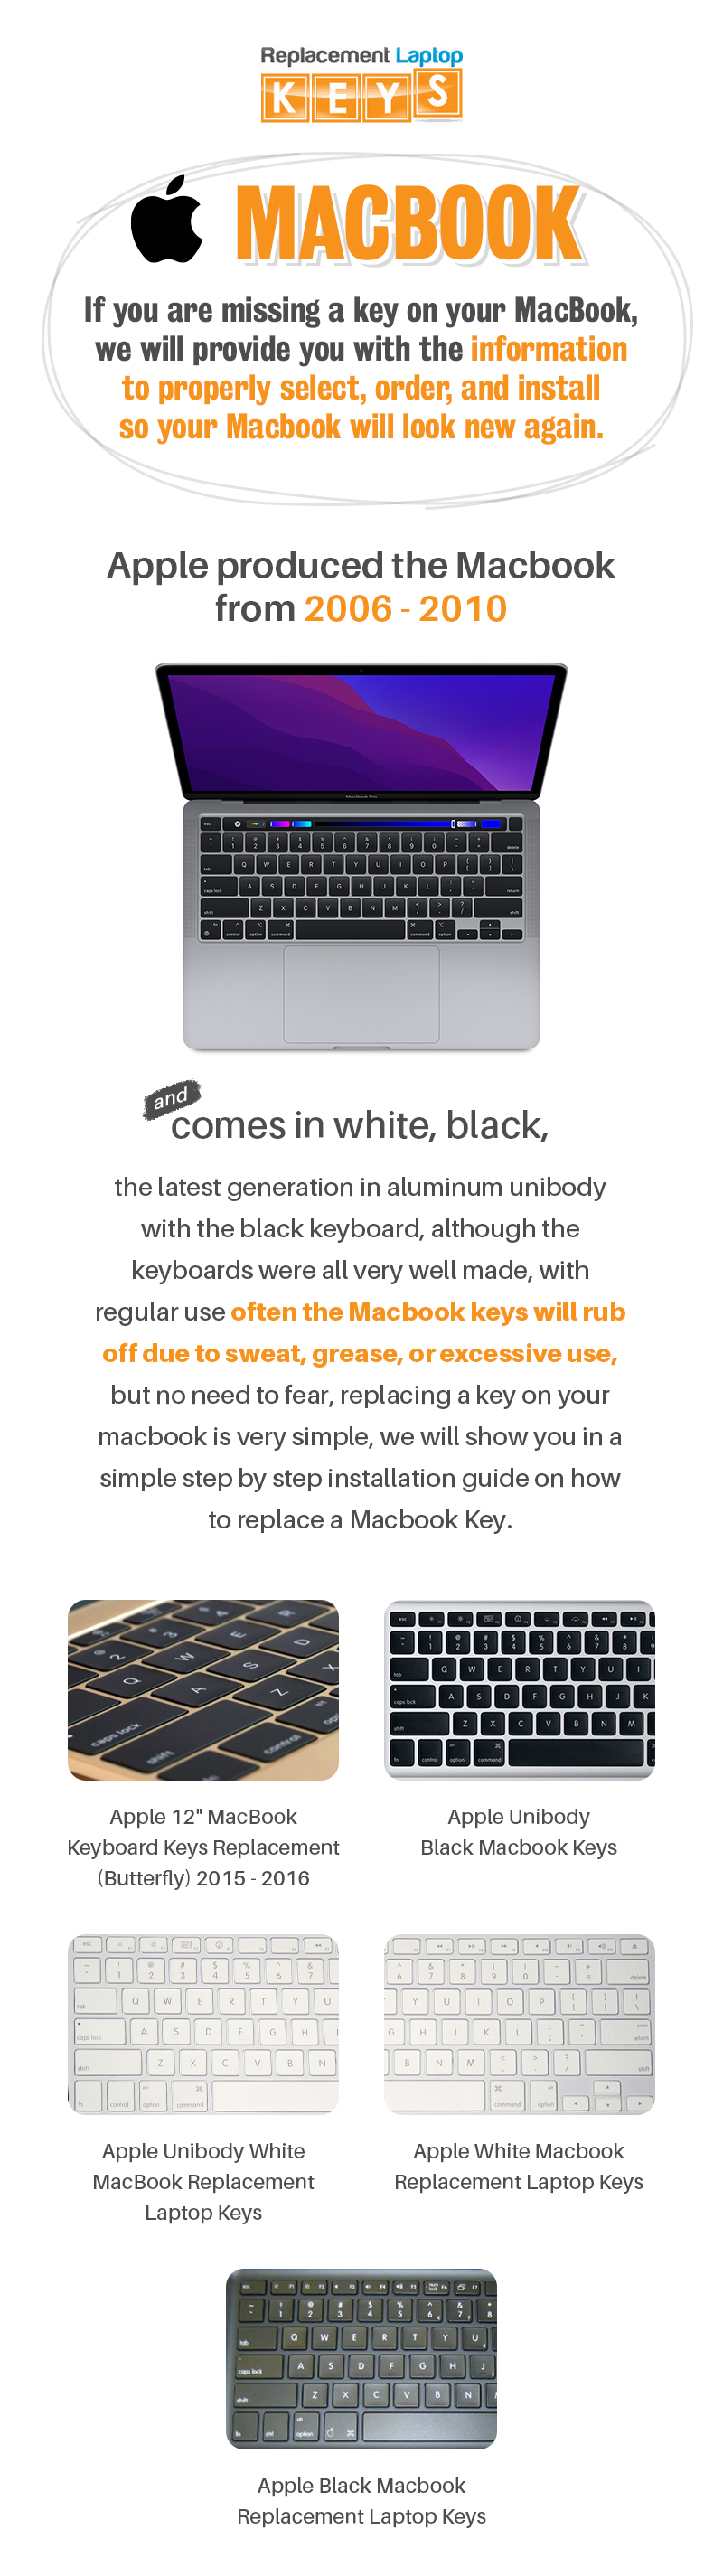 Shop 100% Genuine MacBook Keyboard Keys Online from Replacement Laptop Keys